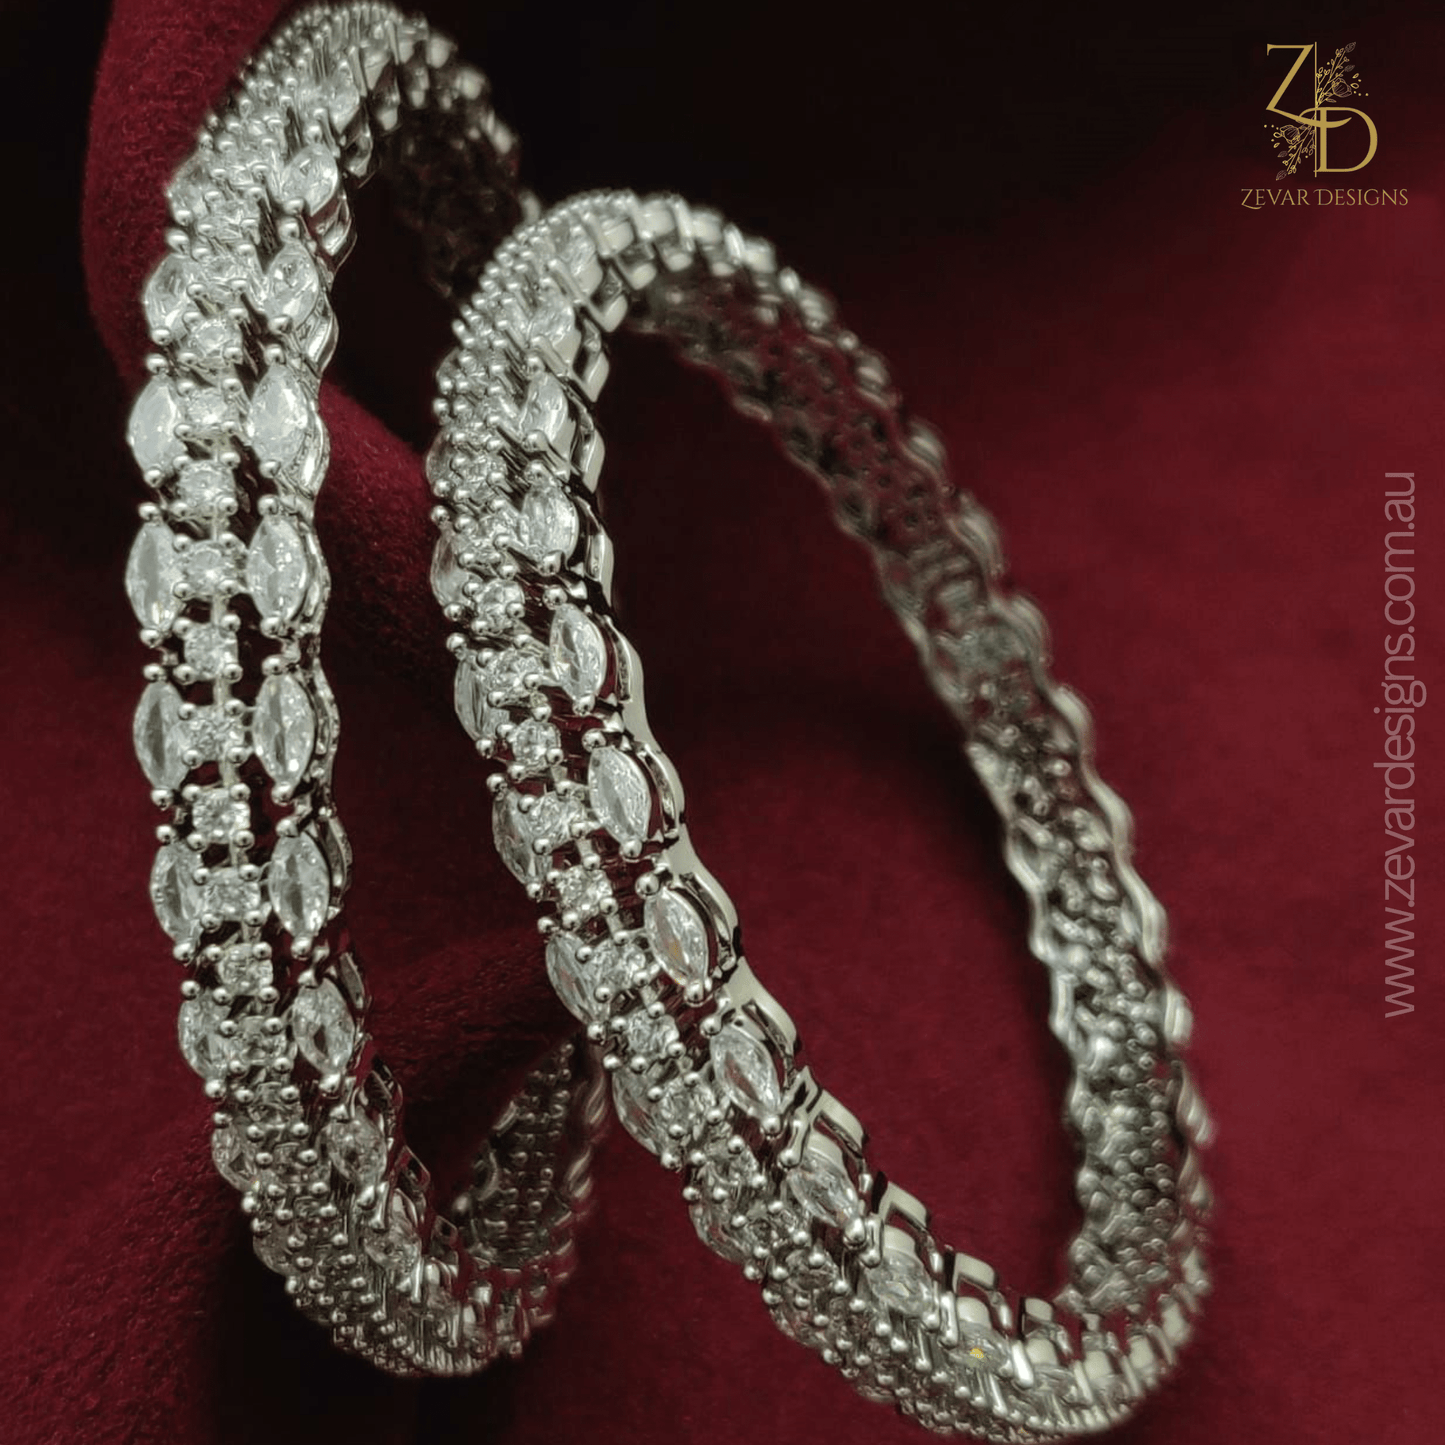 Zevar Designs Bangles & Bracelets - AD AD Bangles - White Rhodium